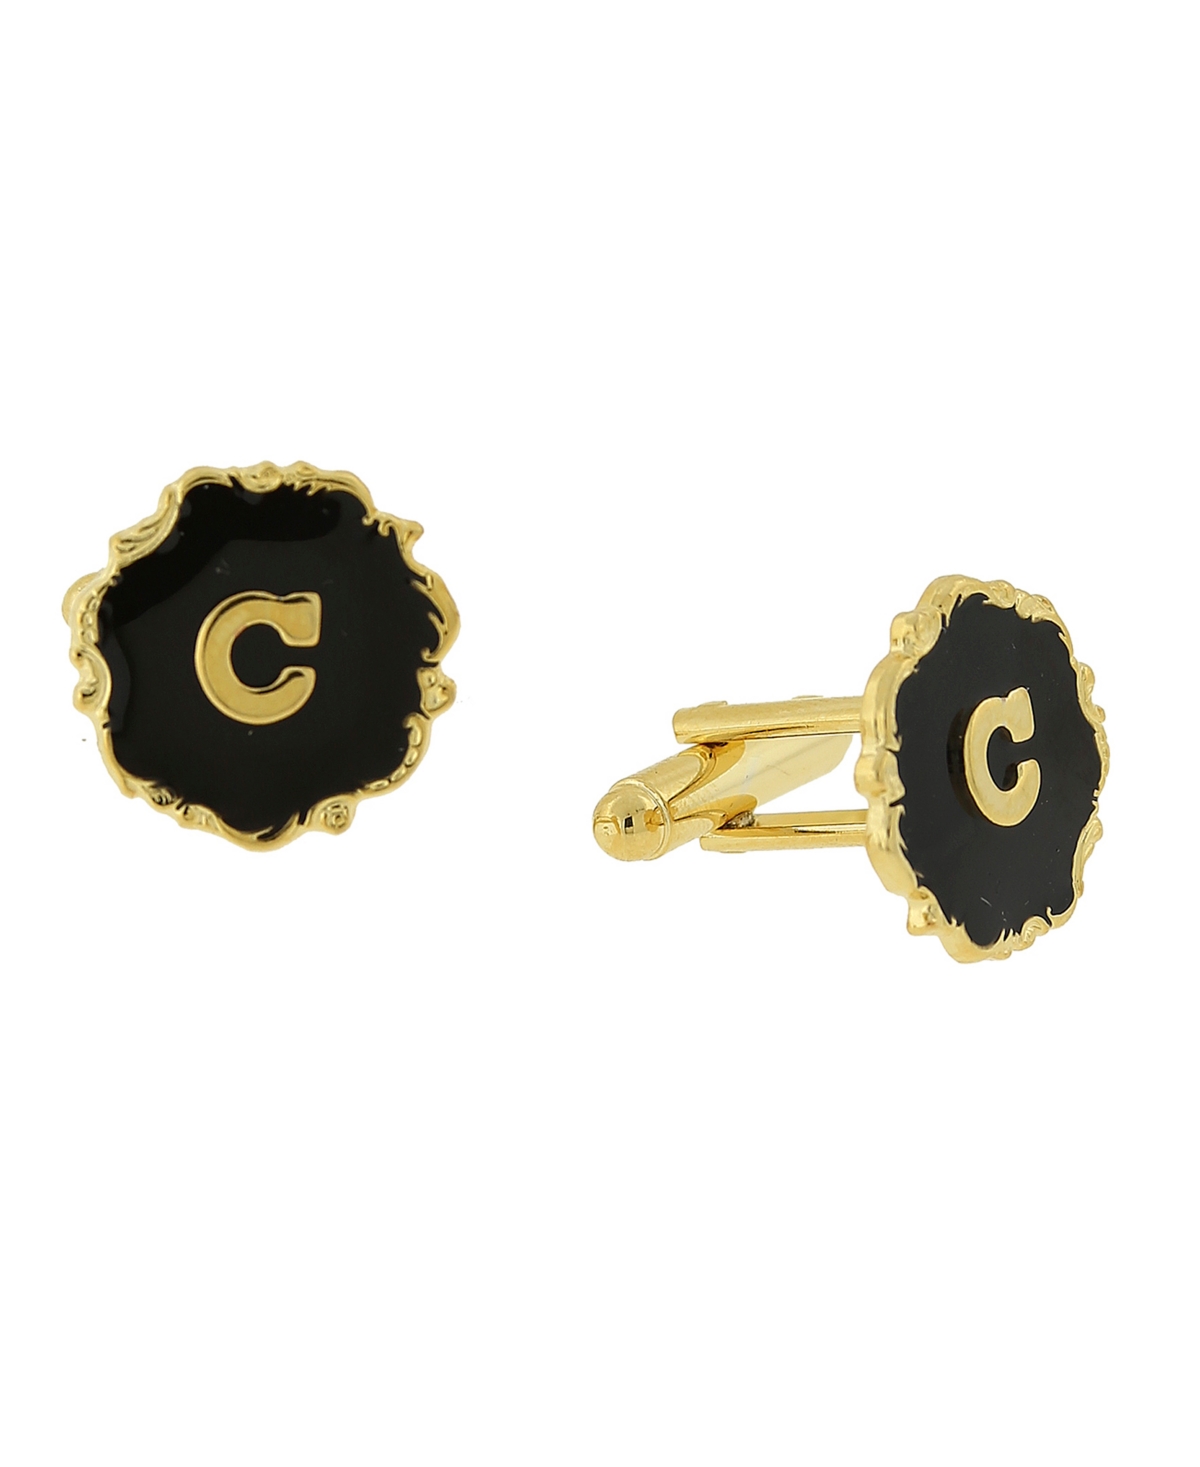 1928 Jewelry 14k Gold-plated Enamel Initial C Cufflinks In Black